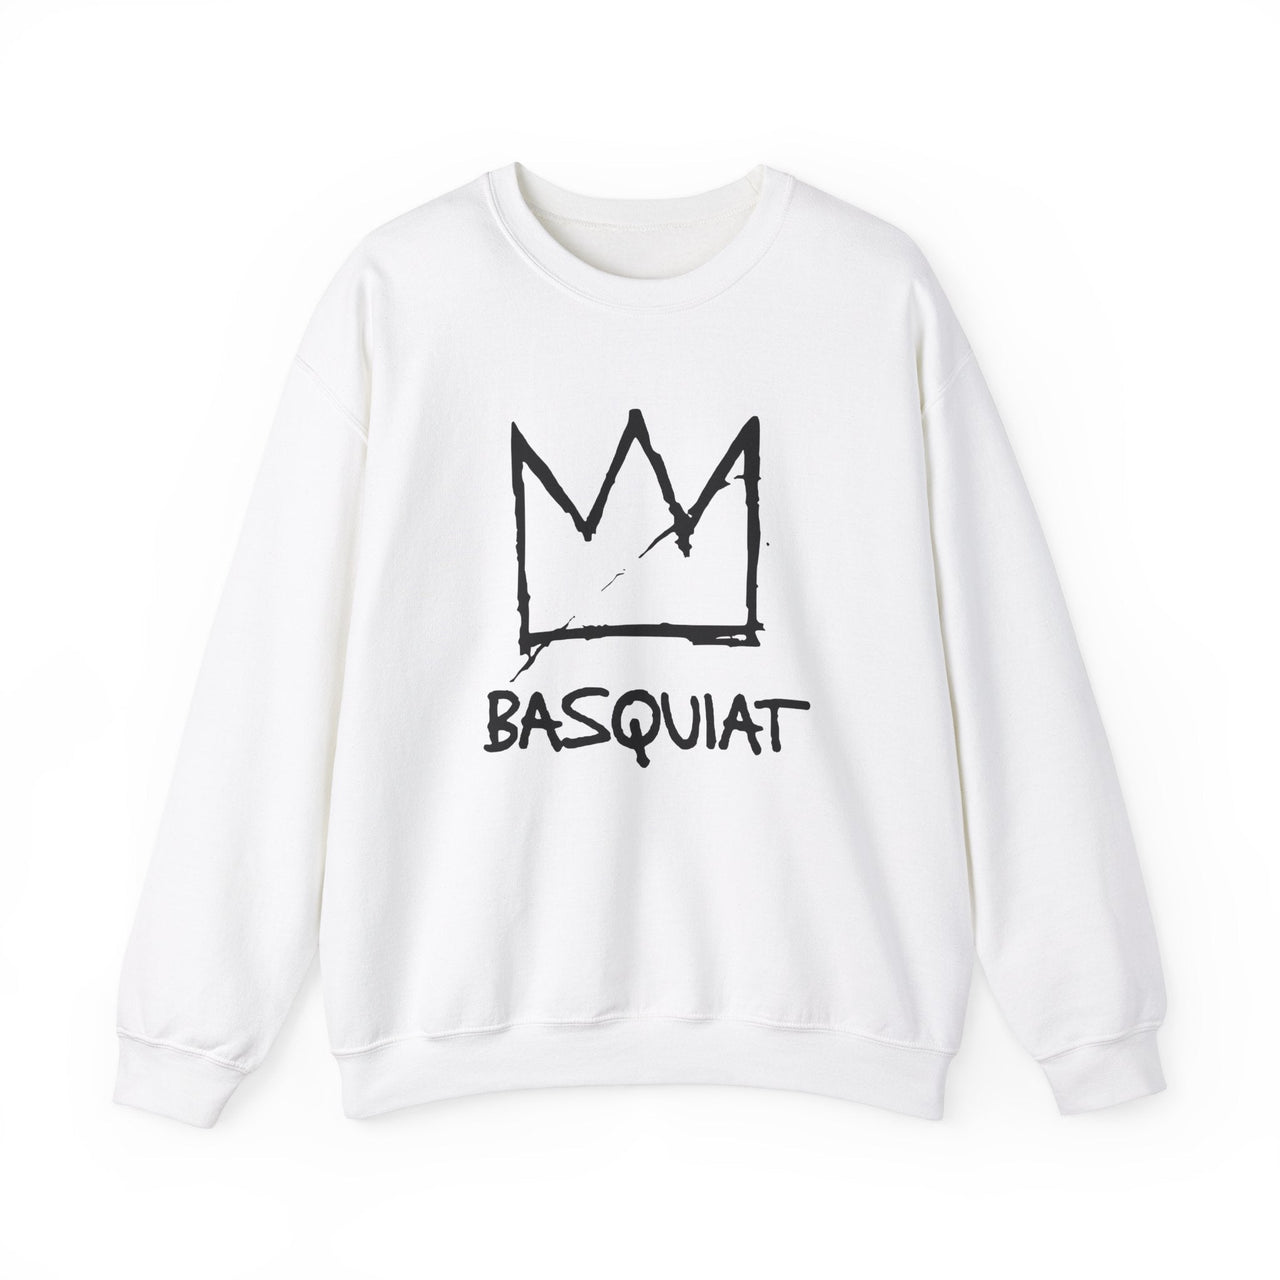 Basquiat Name with Crown Sweatshirt - Clothing - Harvey Ltd